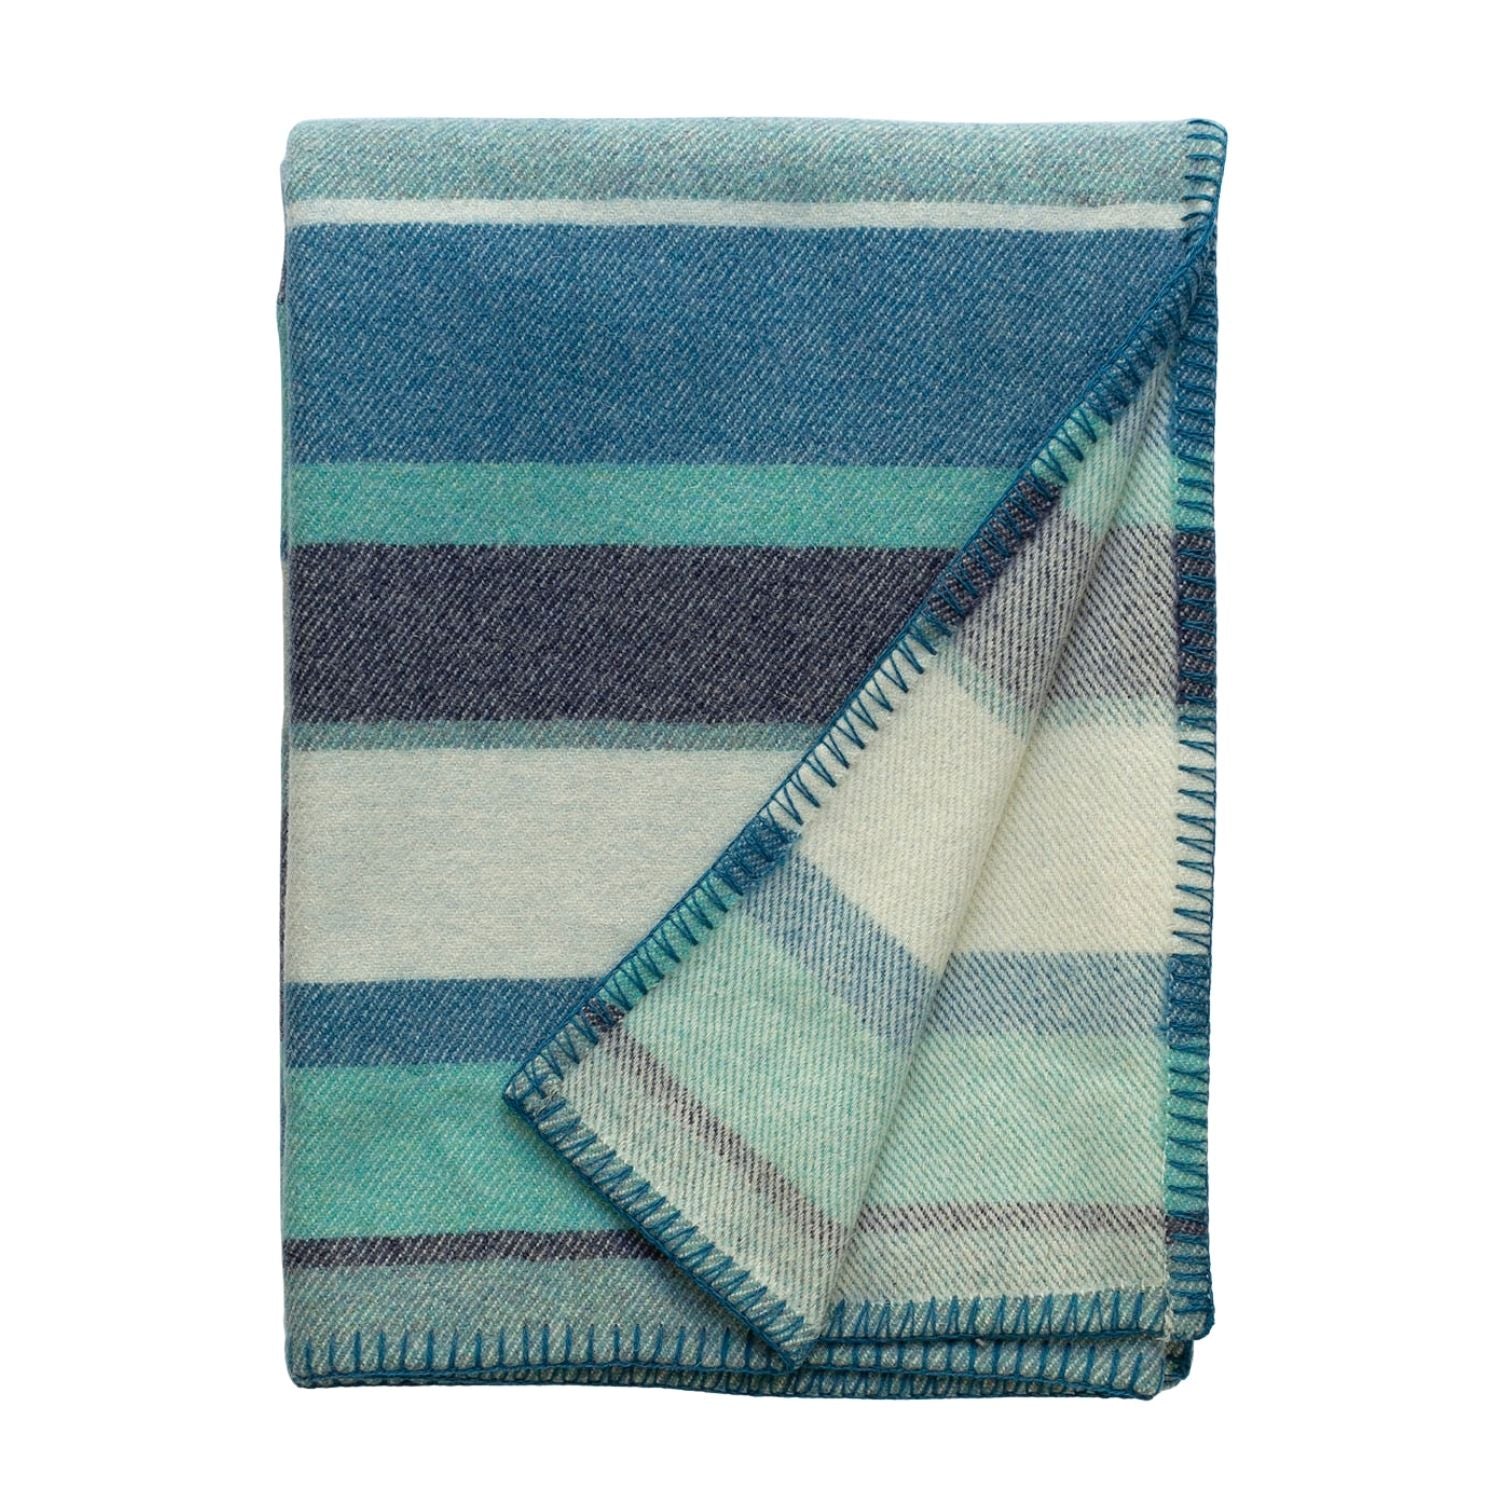 Luxury Pure Wool Blankets and Throws from MElin Tregwynt – Melin Tregwynt